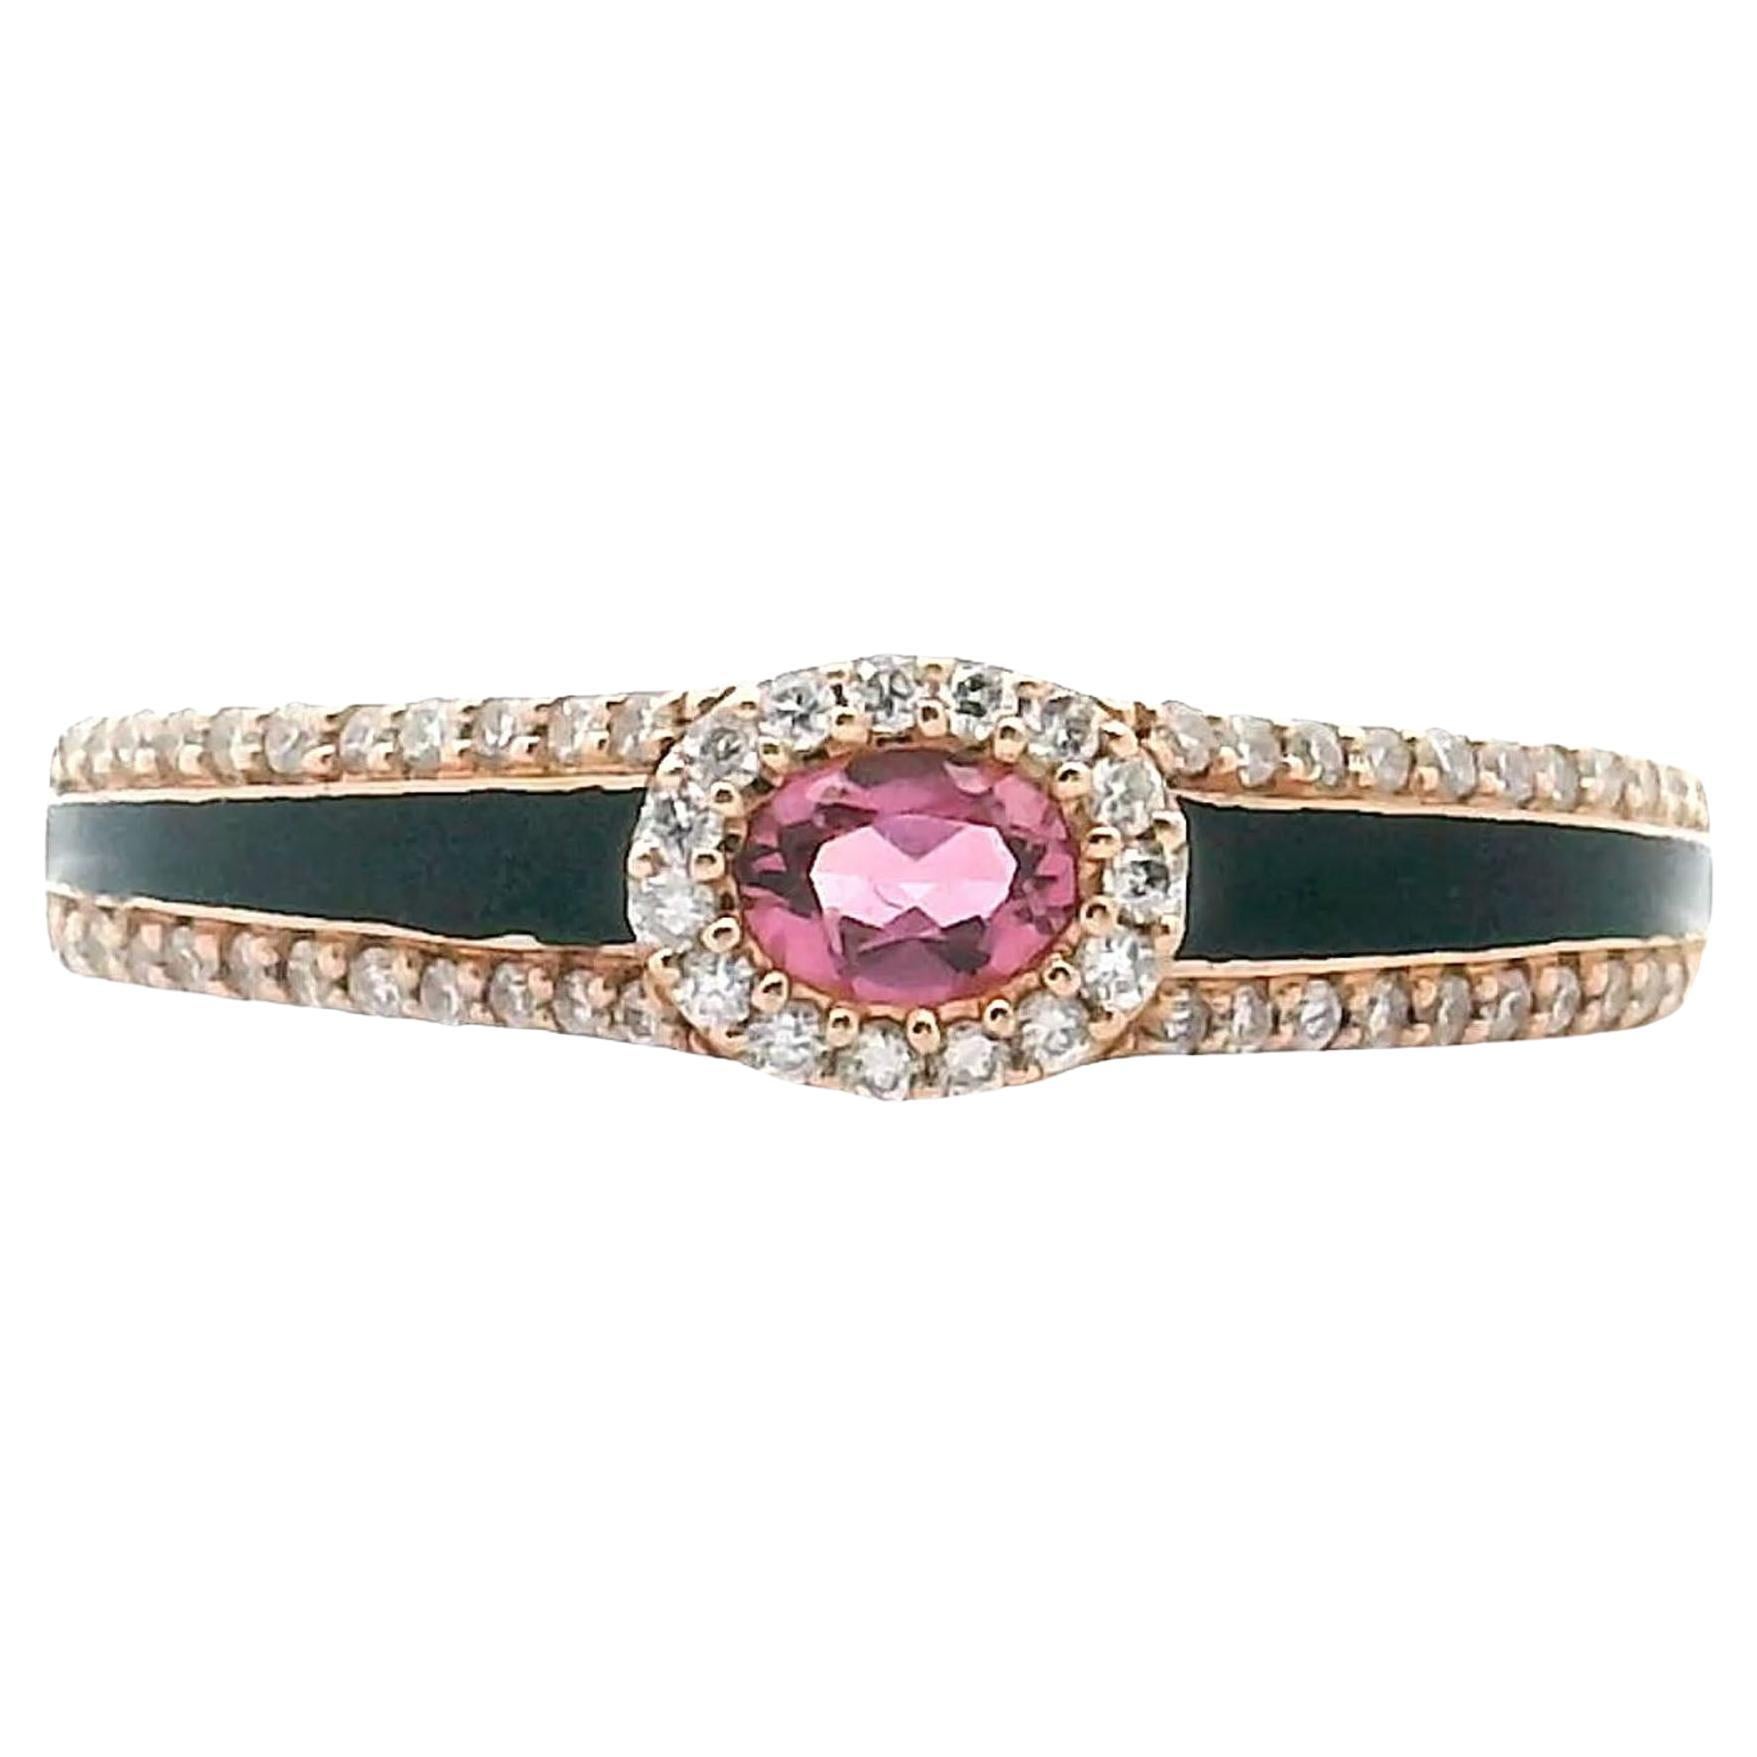 14K Rose Gold Ring with Pink Tourmaline and Black Enamel